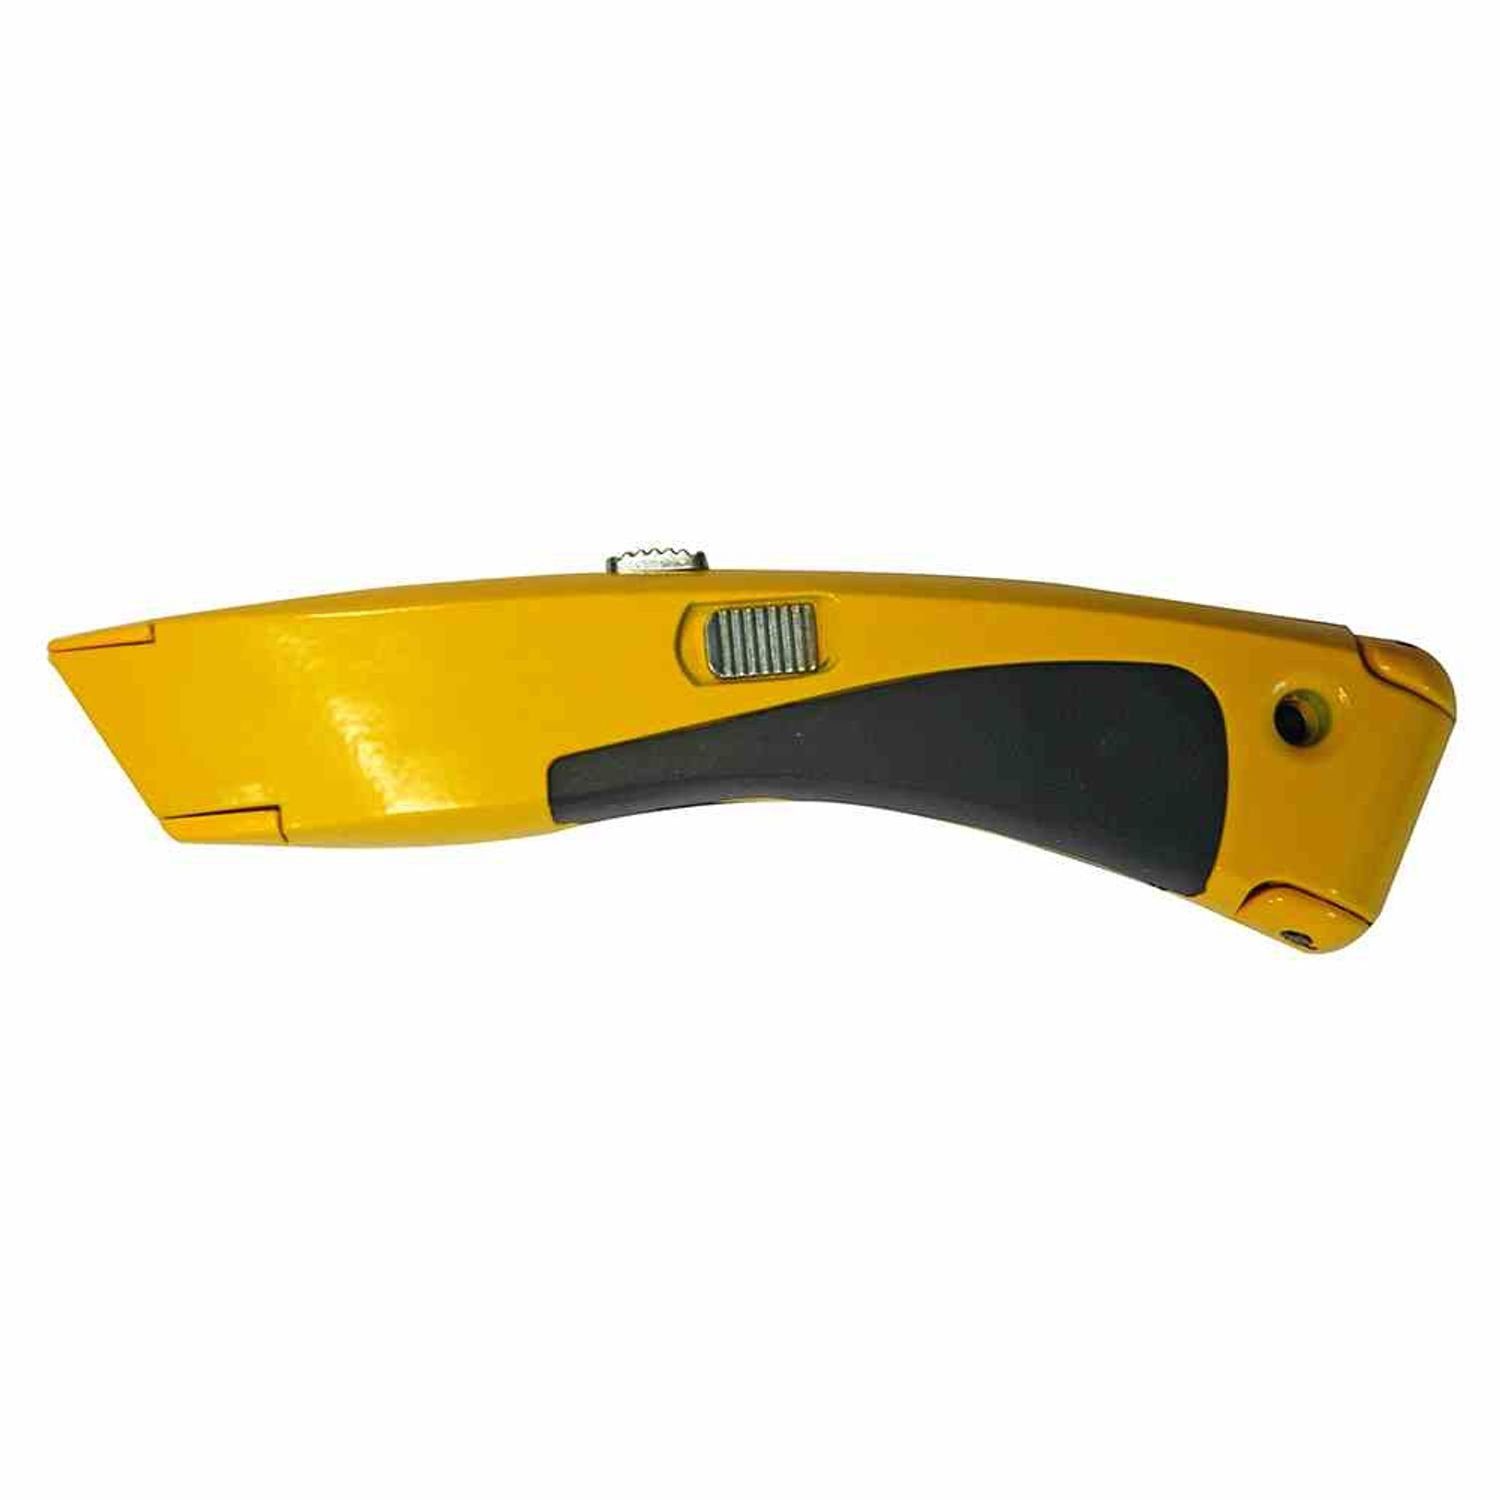 IRONSIDE Cuttermesser Ergonomic-Messer Klappmesser Heimwerker Werkzeuge IRONSIDE